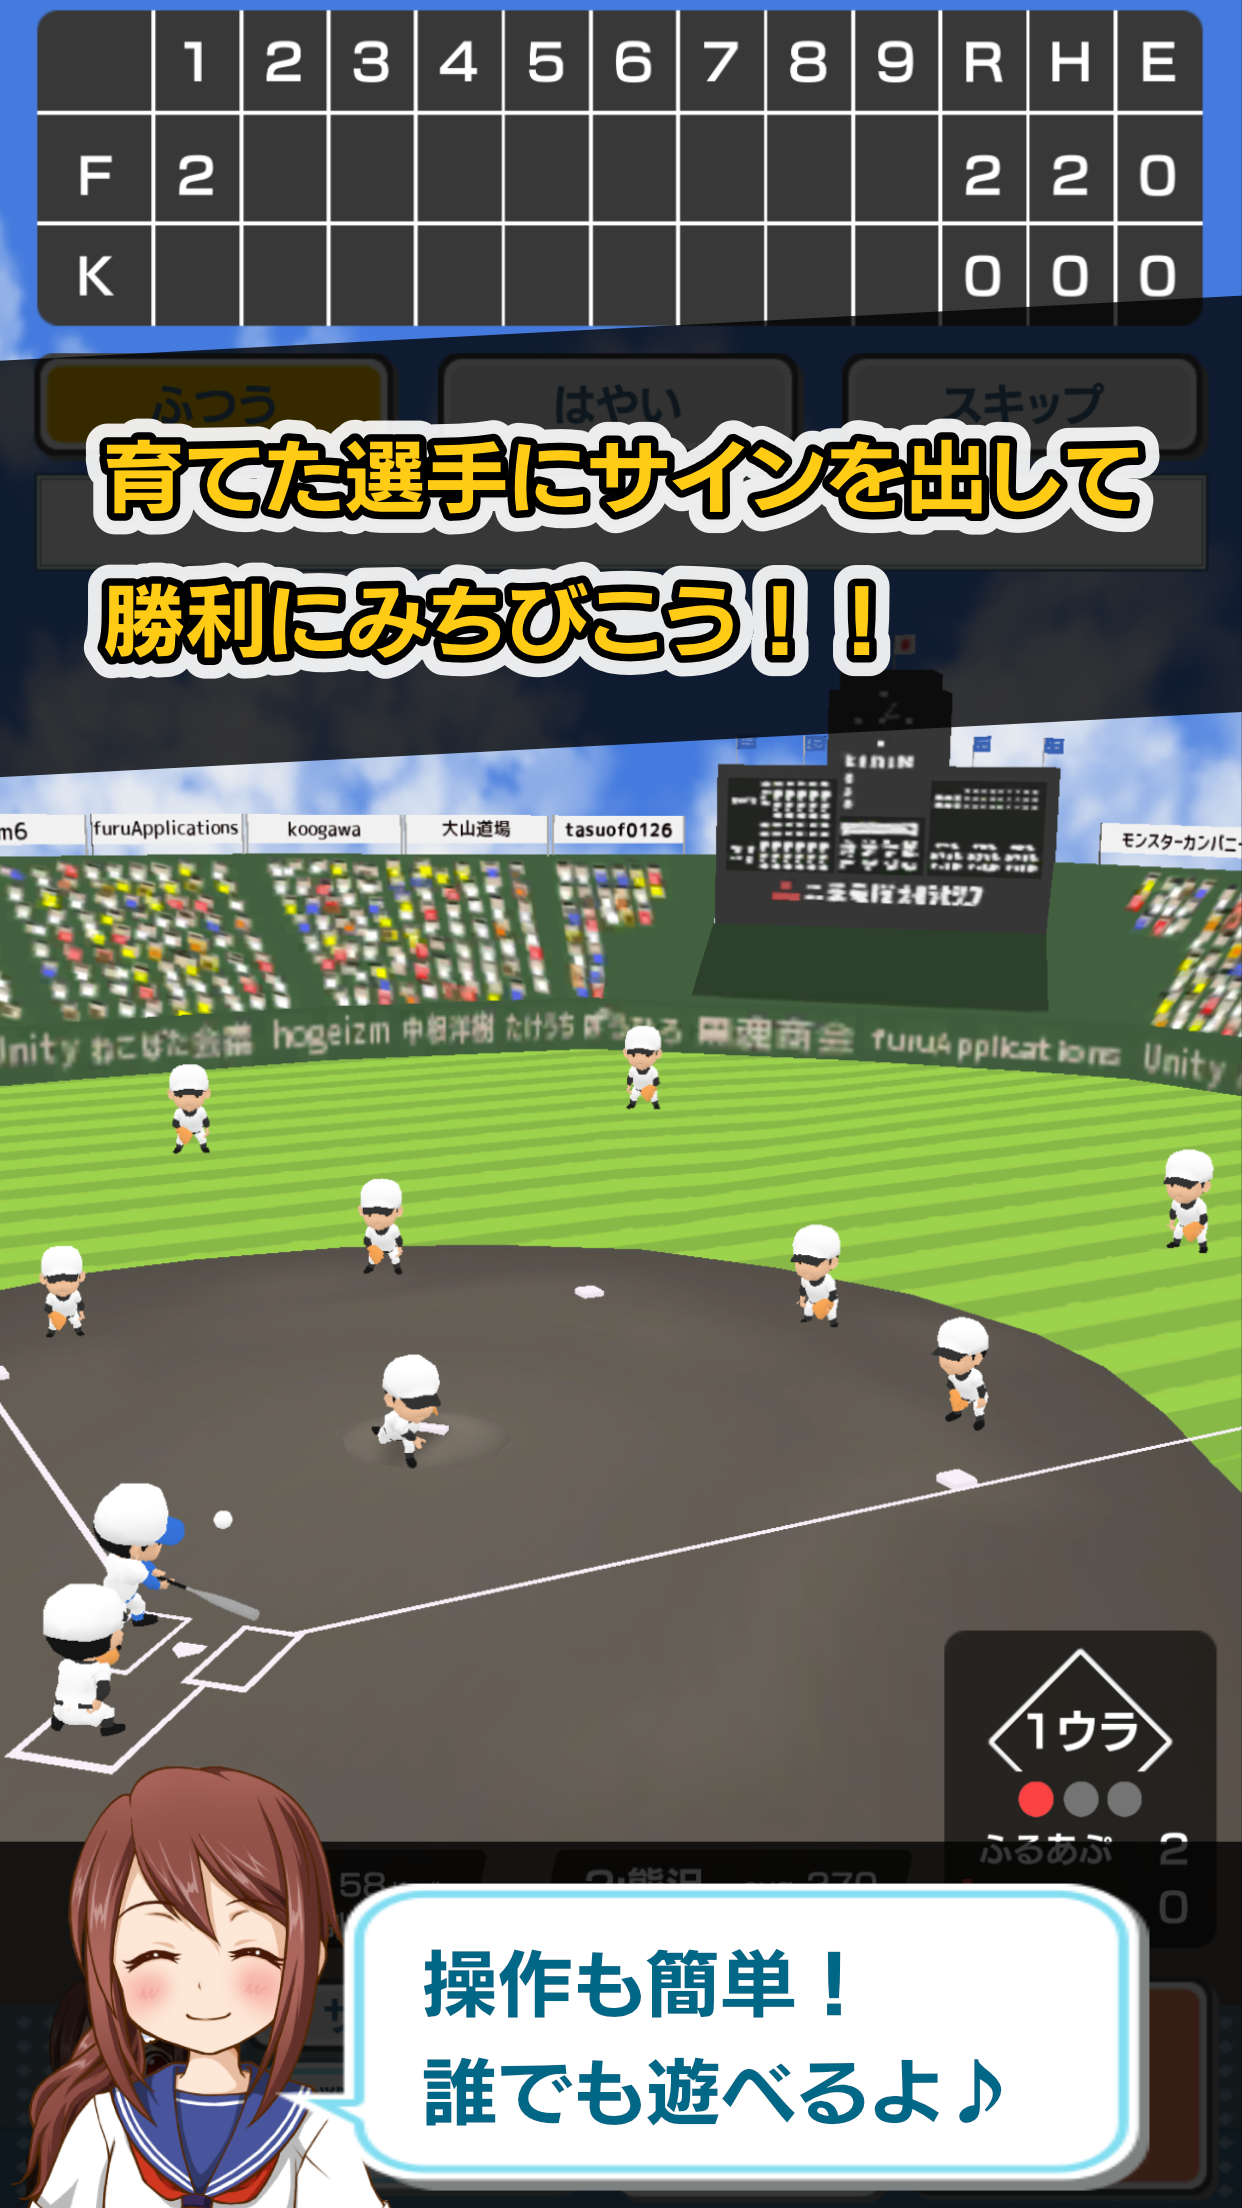 Screenshot 1 of Кошиэн - бейсбол средней школы 2.3.9